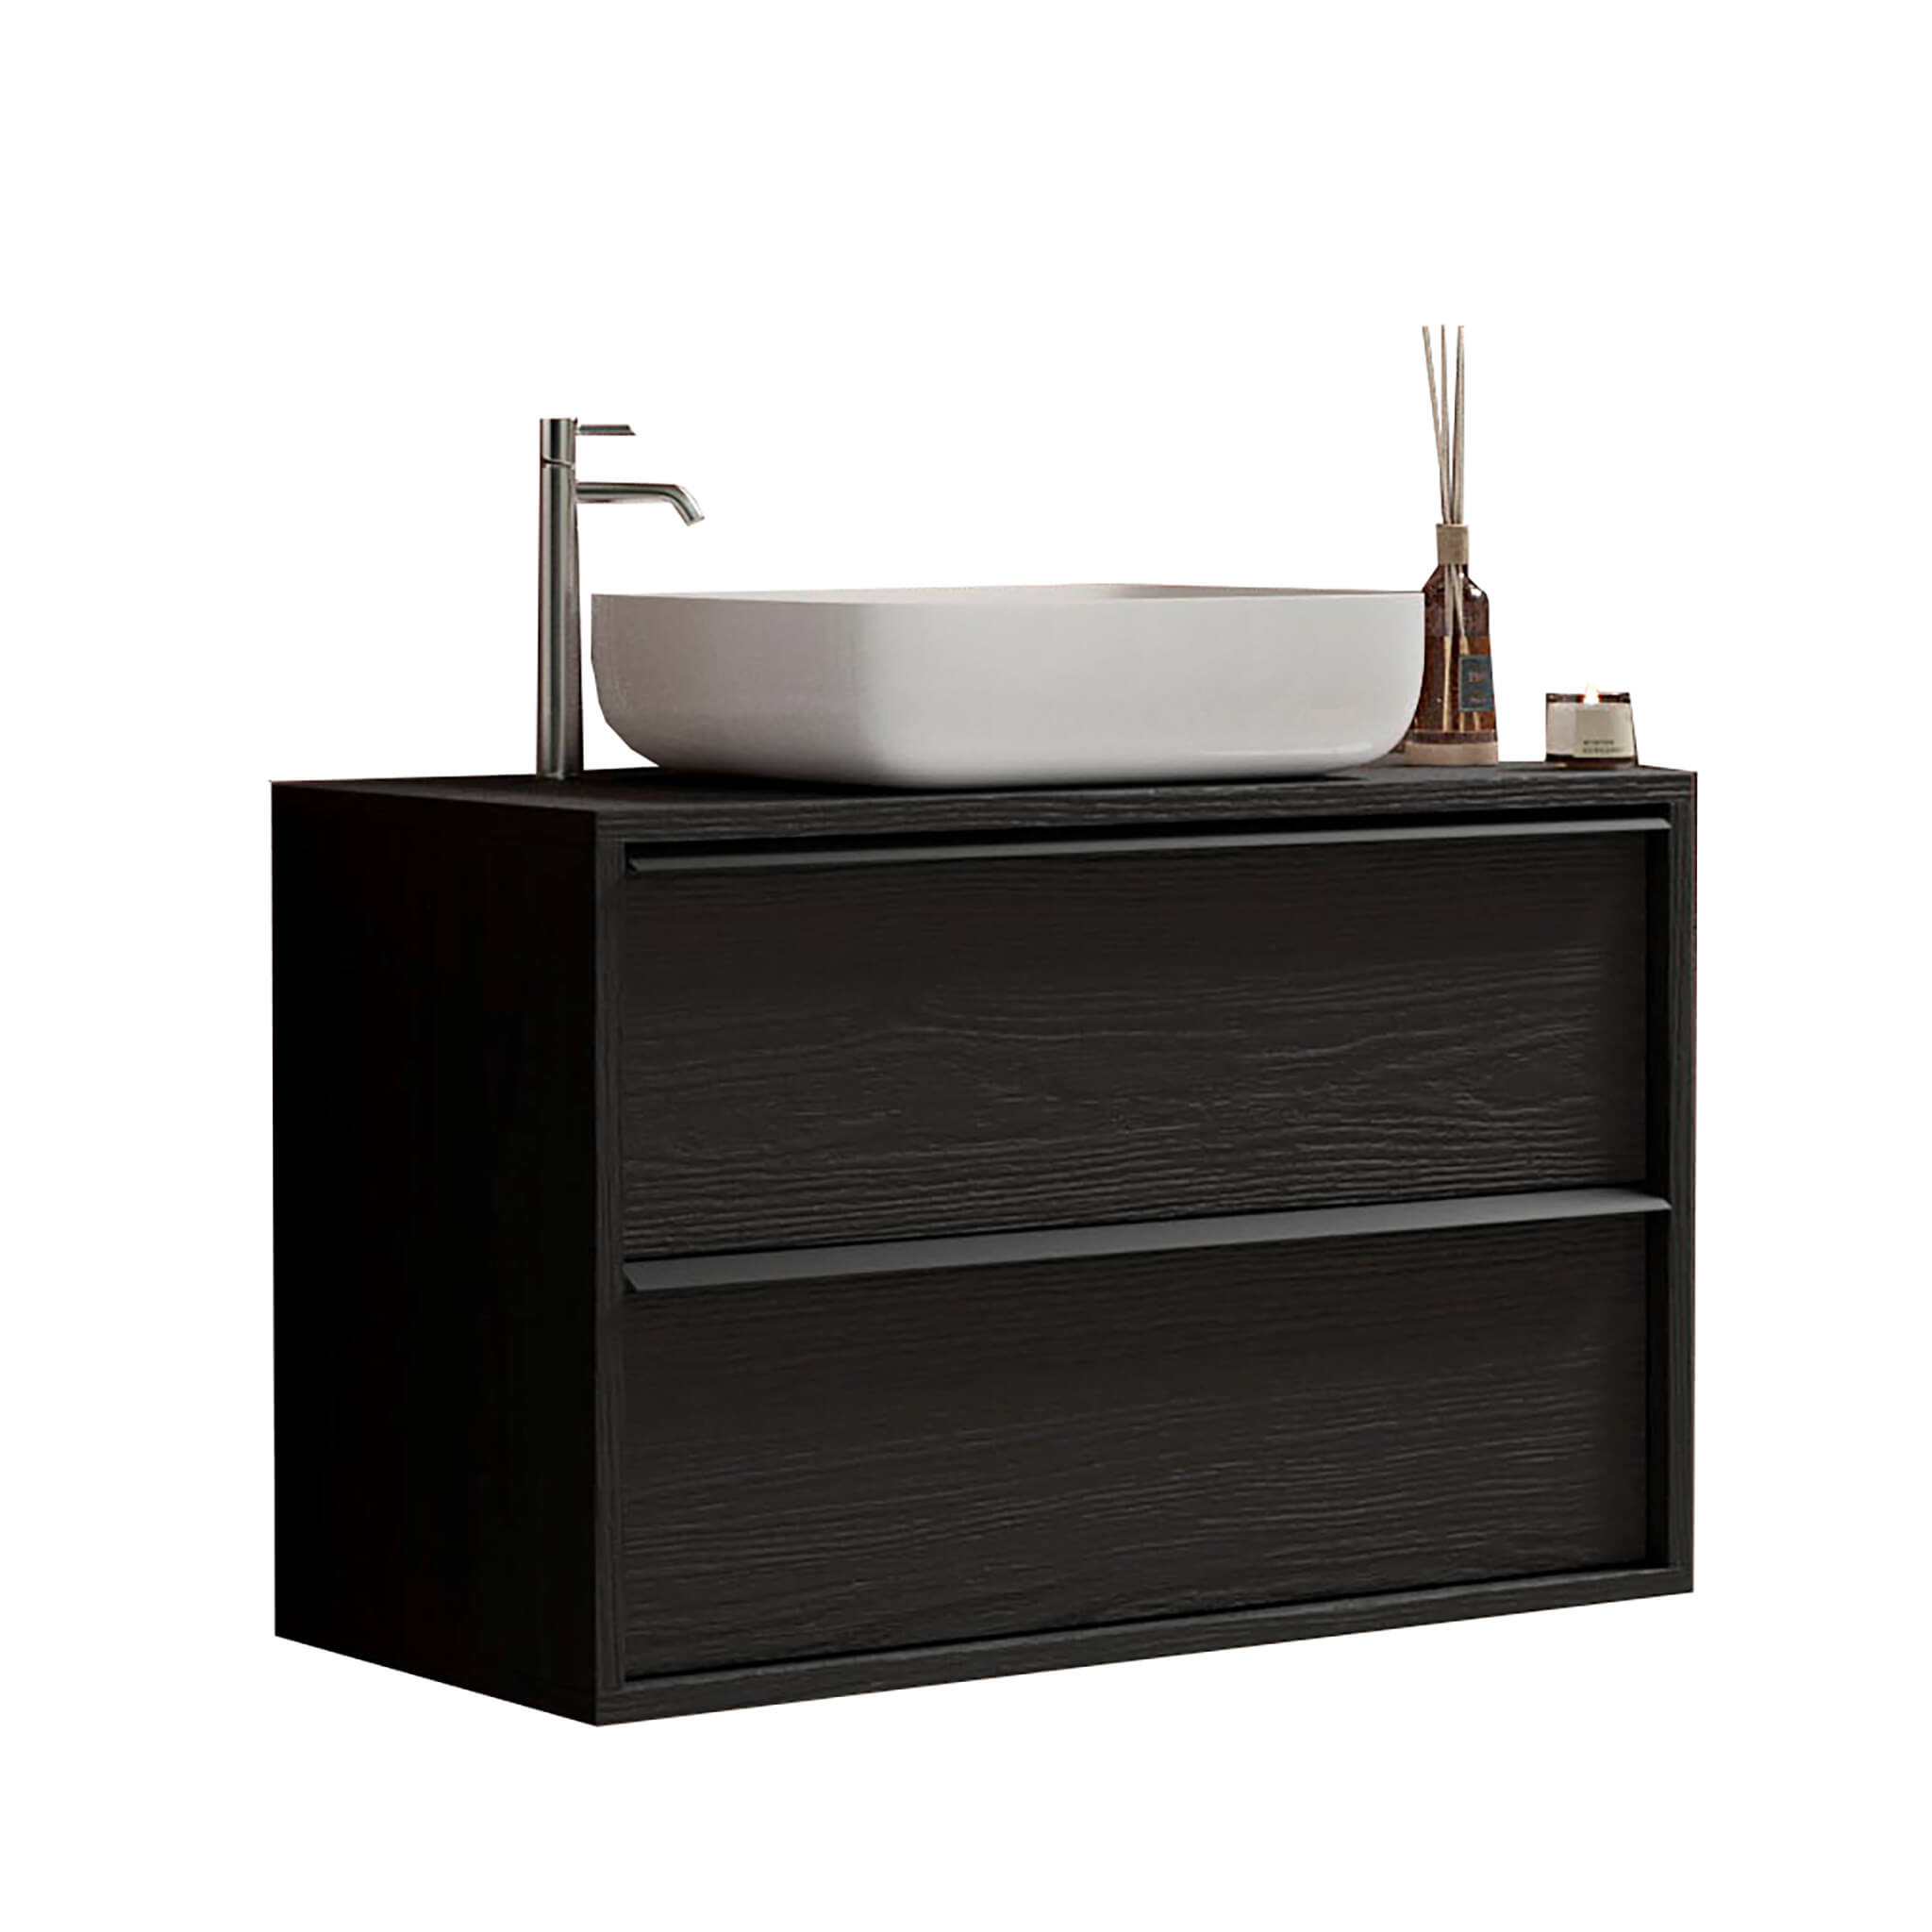 Milani Home mobile lavabo sospeso di design moderno industrial cm 92 x 92 x 43 h Antracite 92 x 92 x 43 cm